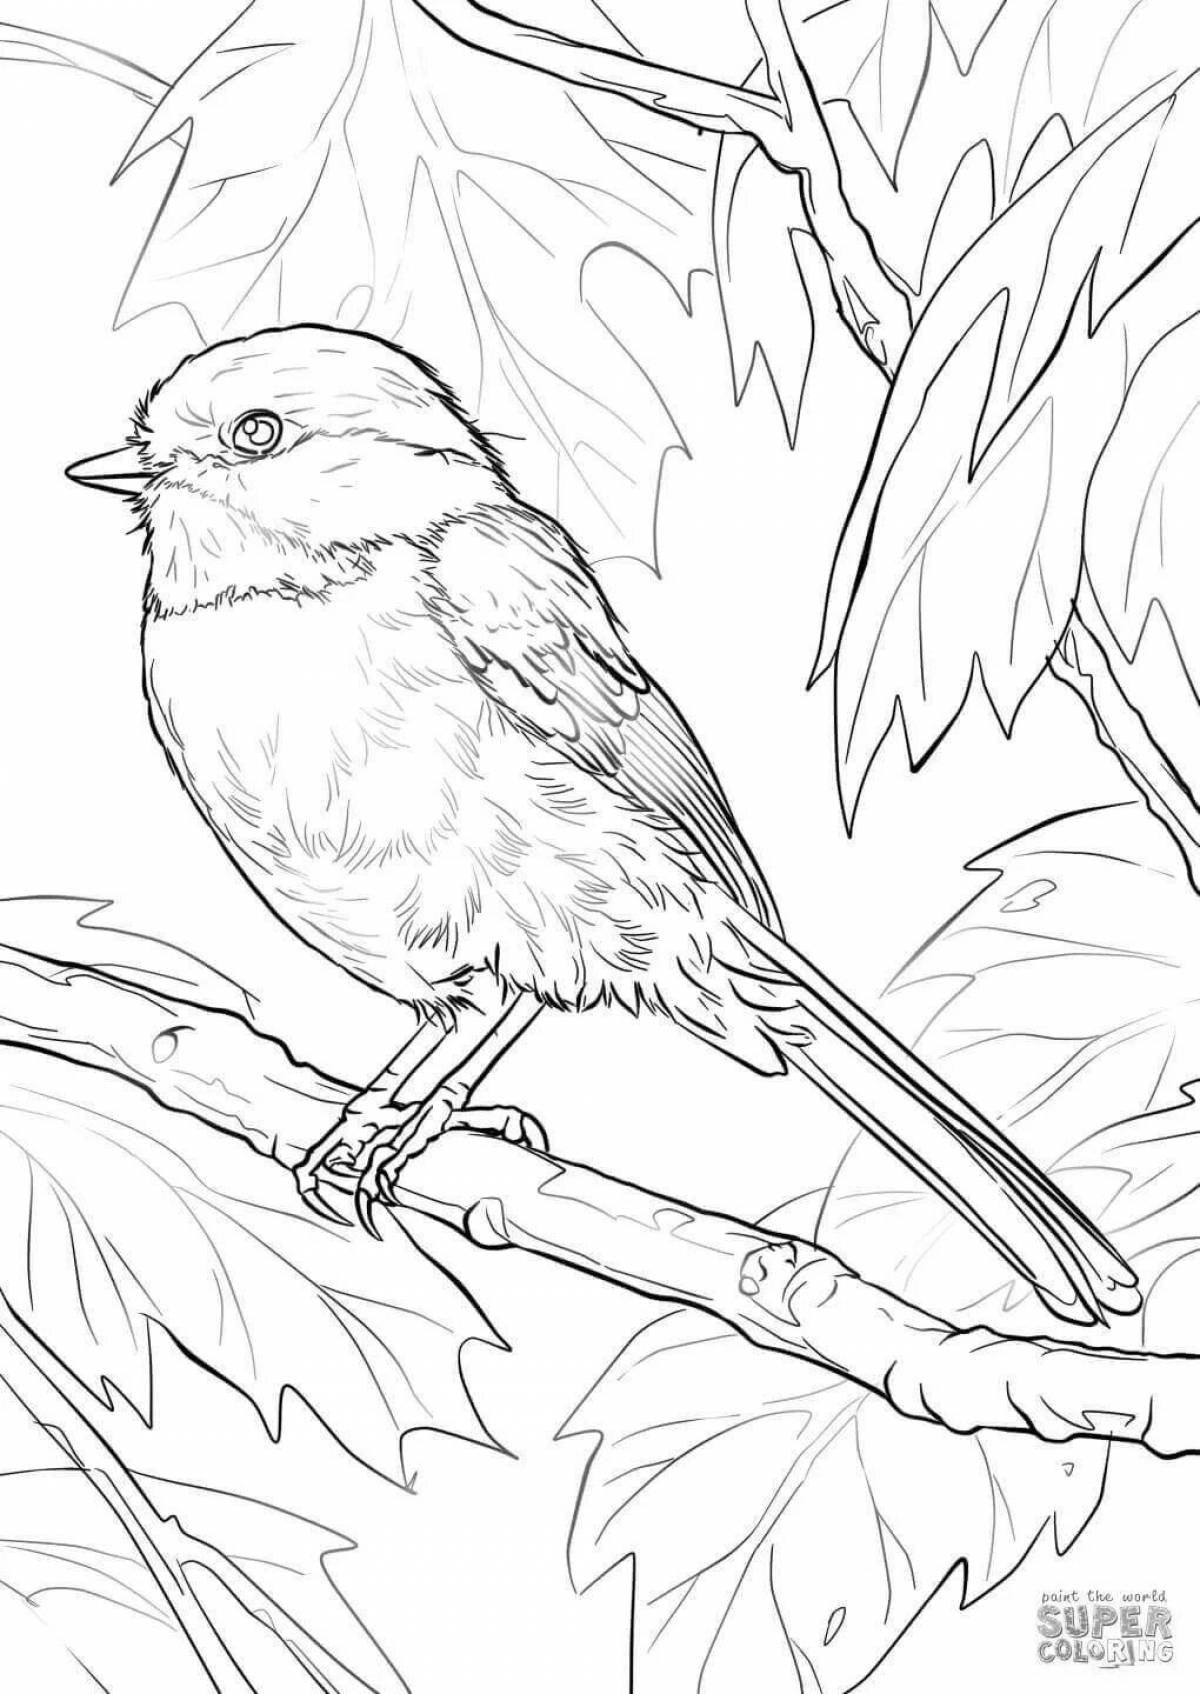 A shining bird on a branch